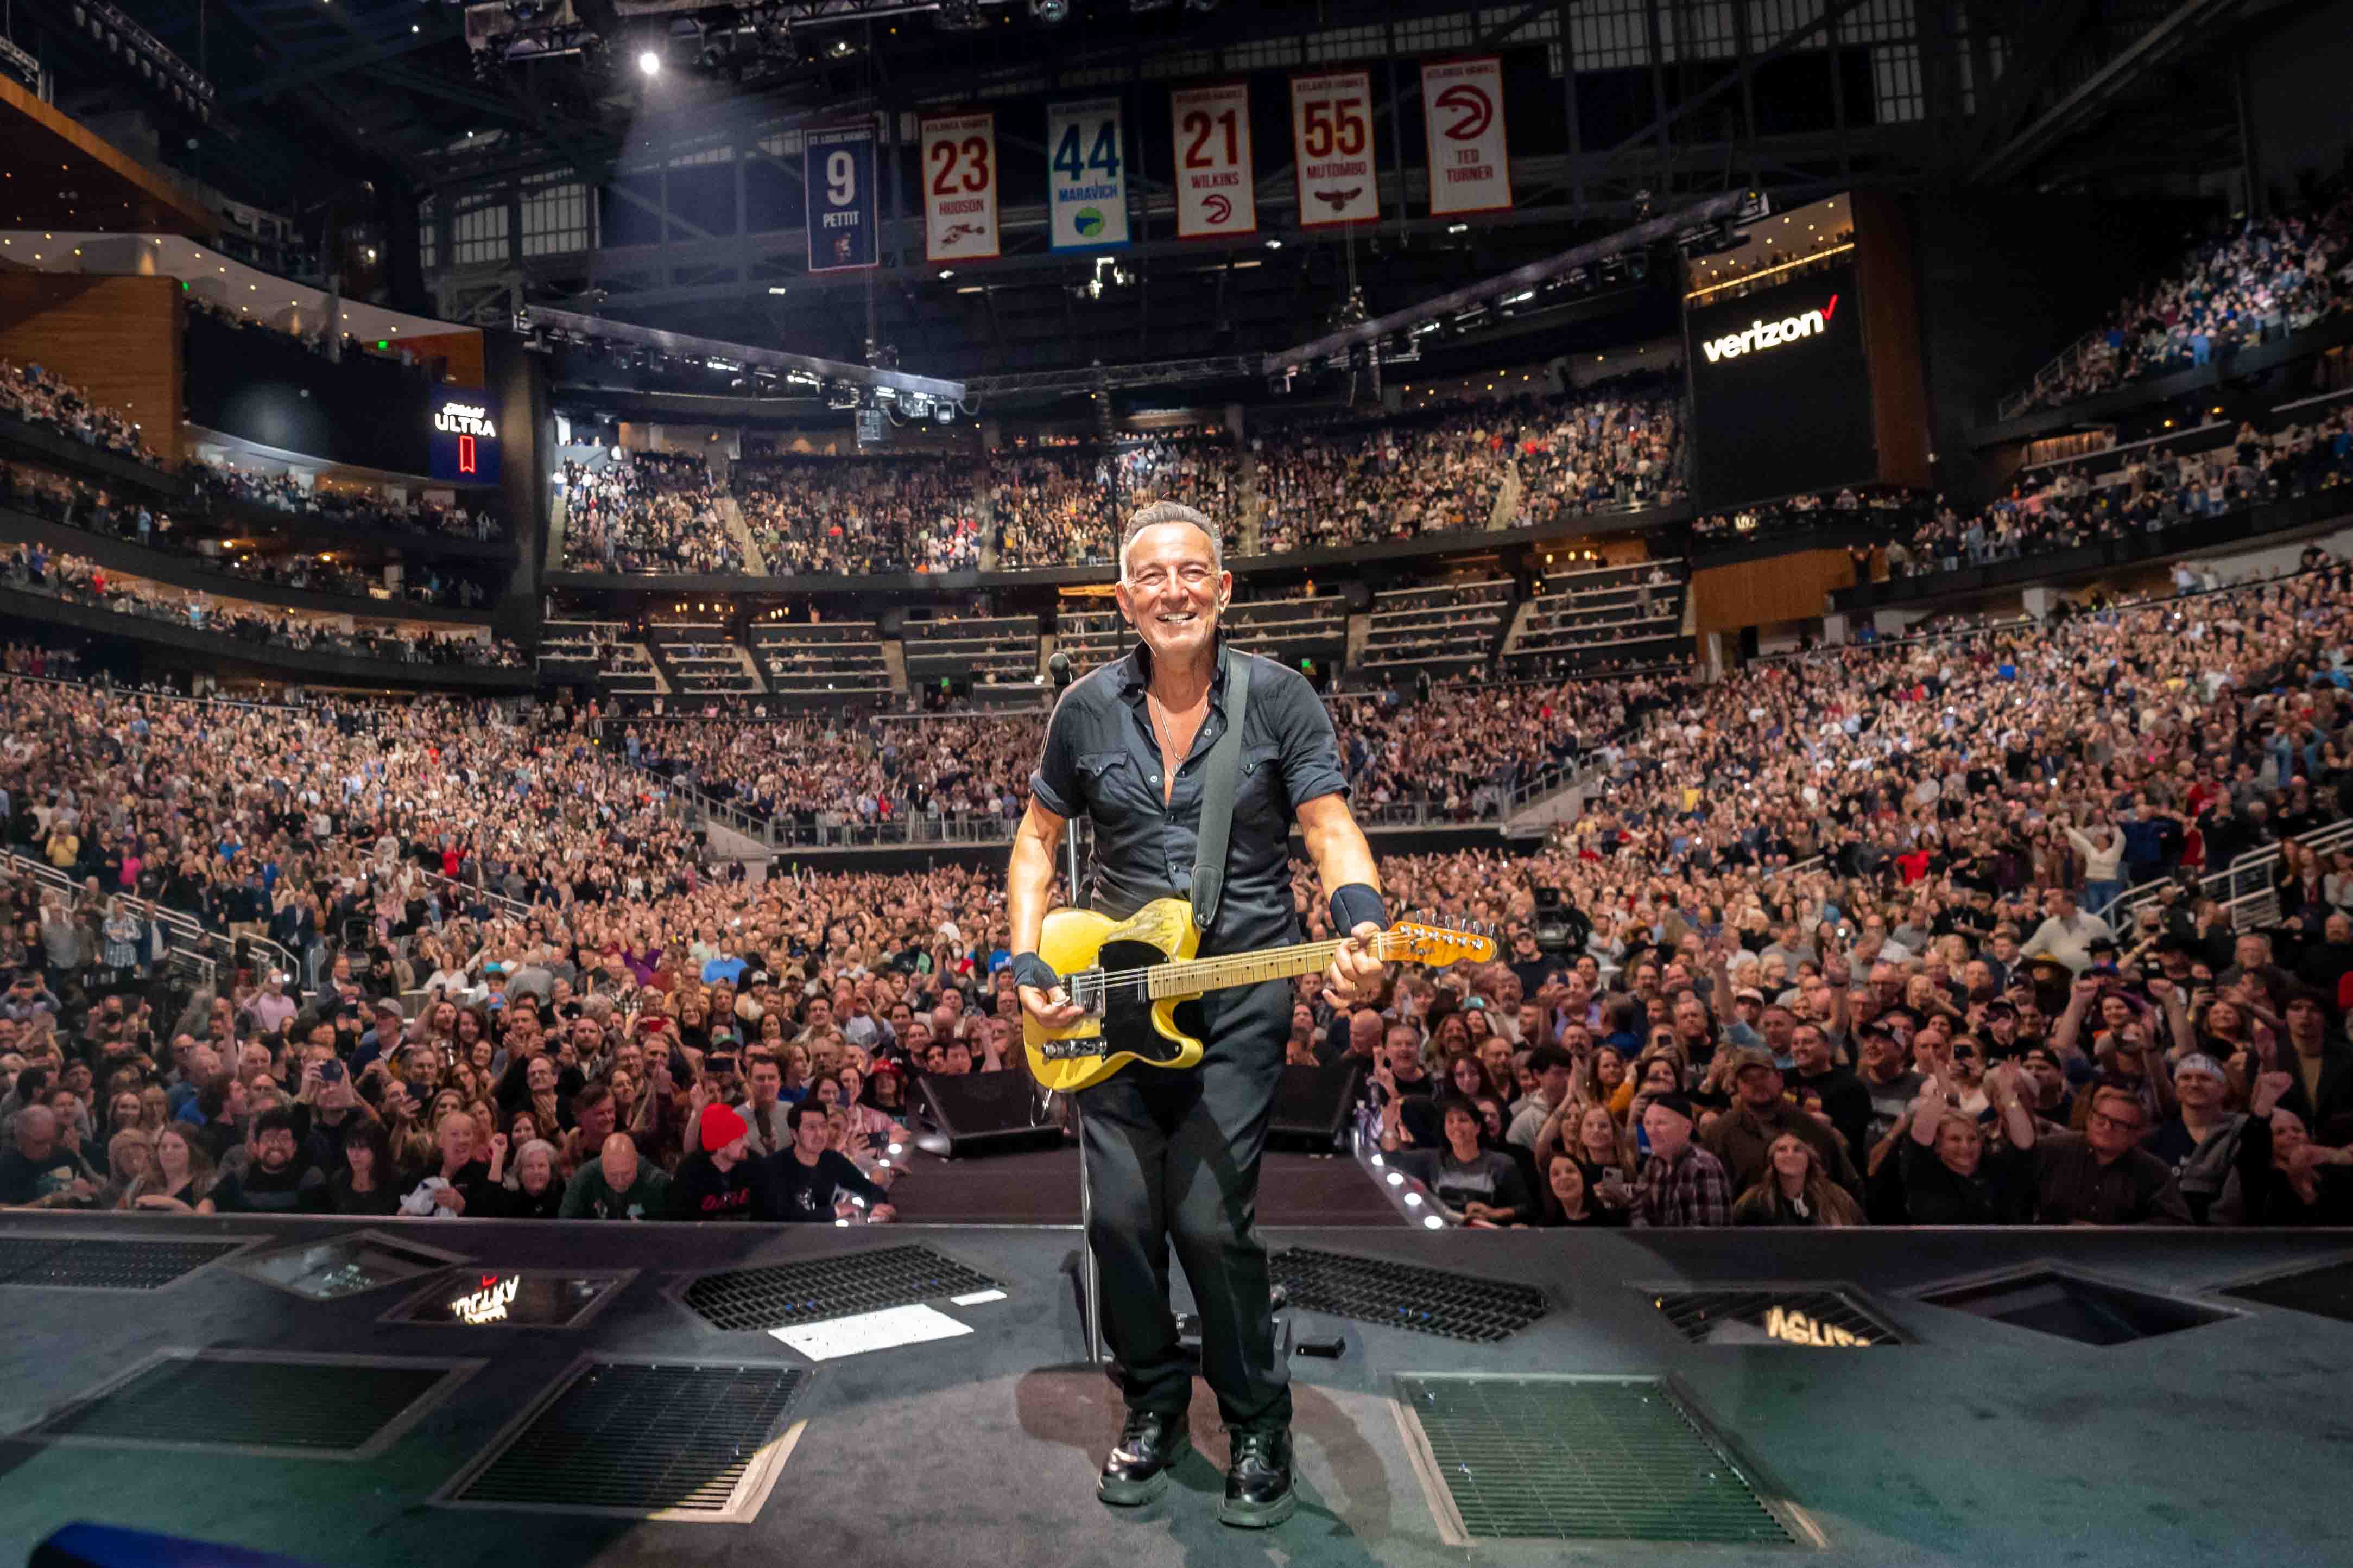 Bruce Springsteen & E Street Band at State Farm Arena, Atlanta, GA on February 3, 2023.